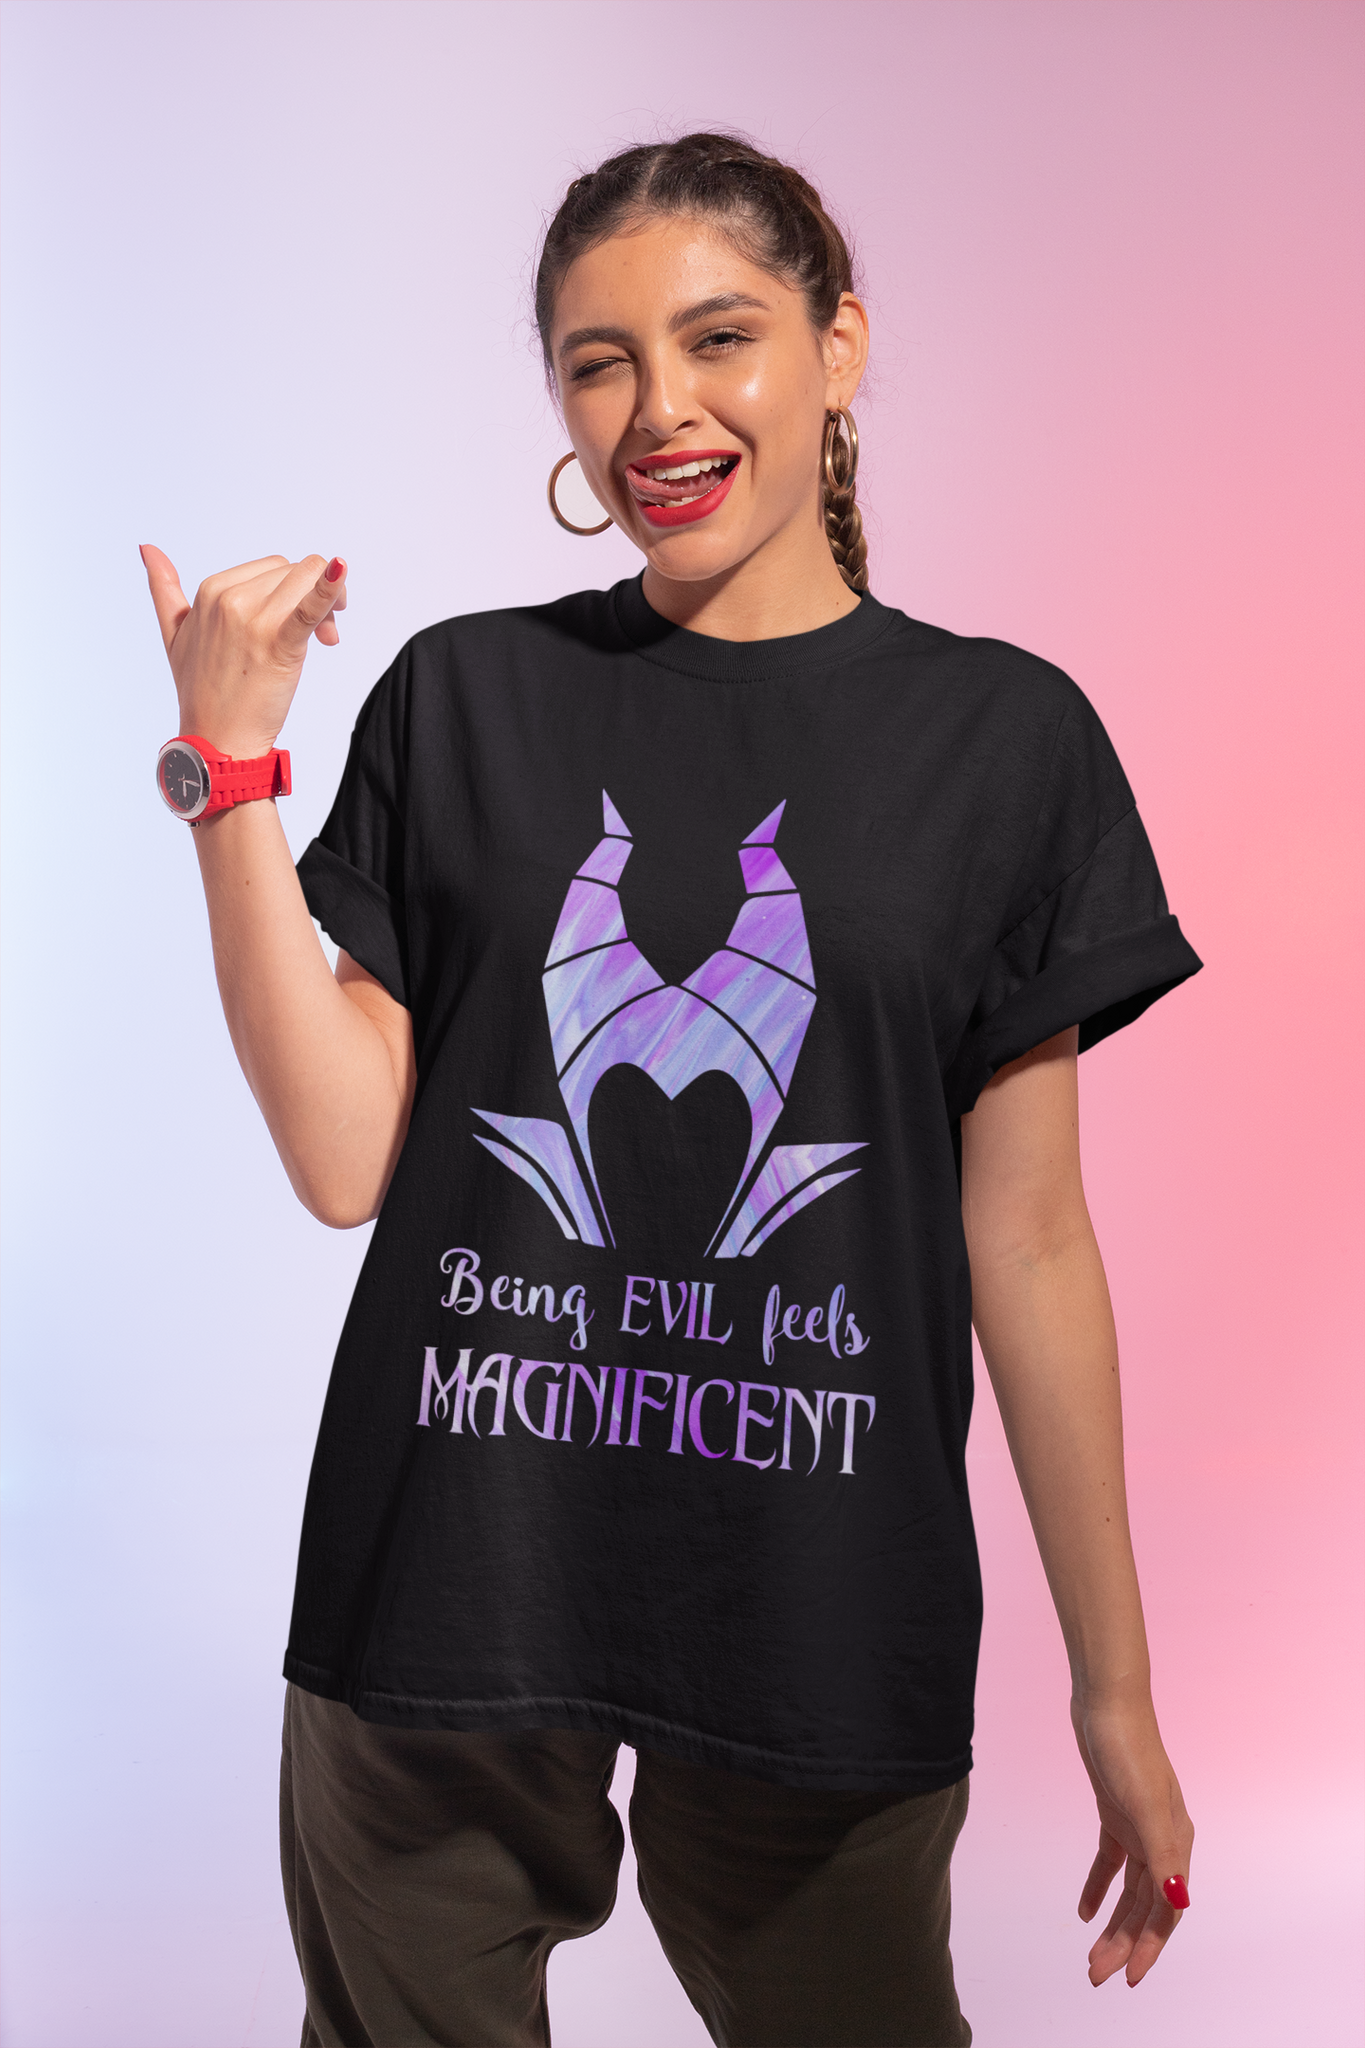 Disney Maleficent T Shirt, Disney Villains T Shirt, Being Evil Feels Magnificent Tshirt